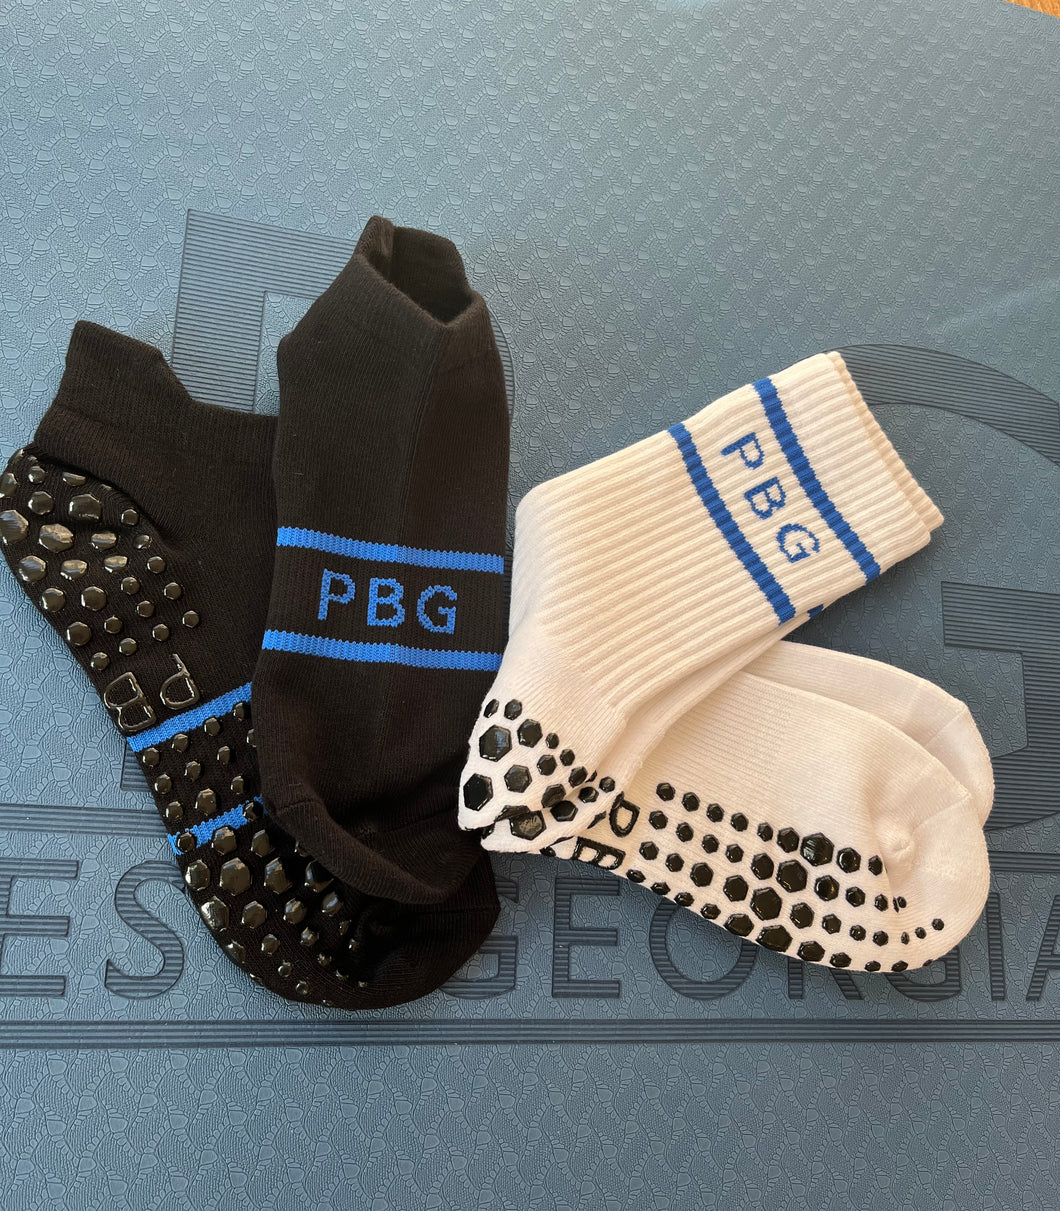 Super Soft PBG Grip Socks - Mixed Pack (One white pair athletic, one black pair trainer)